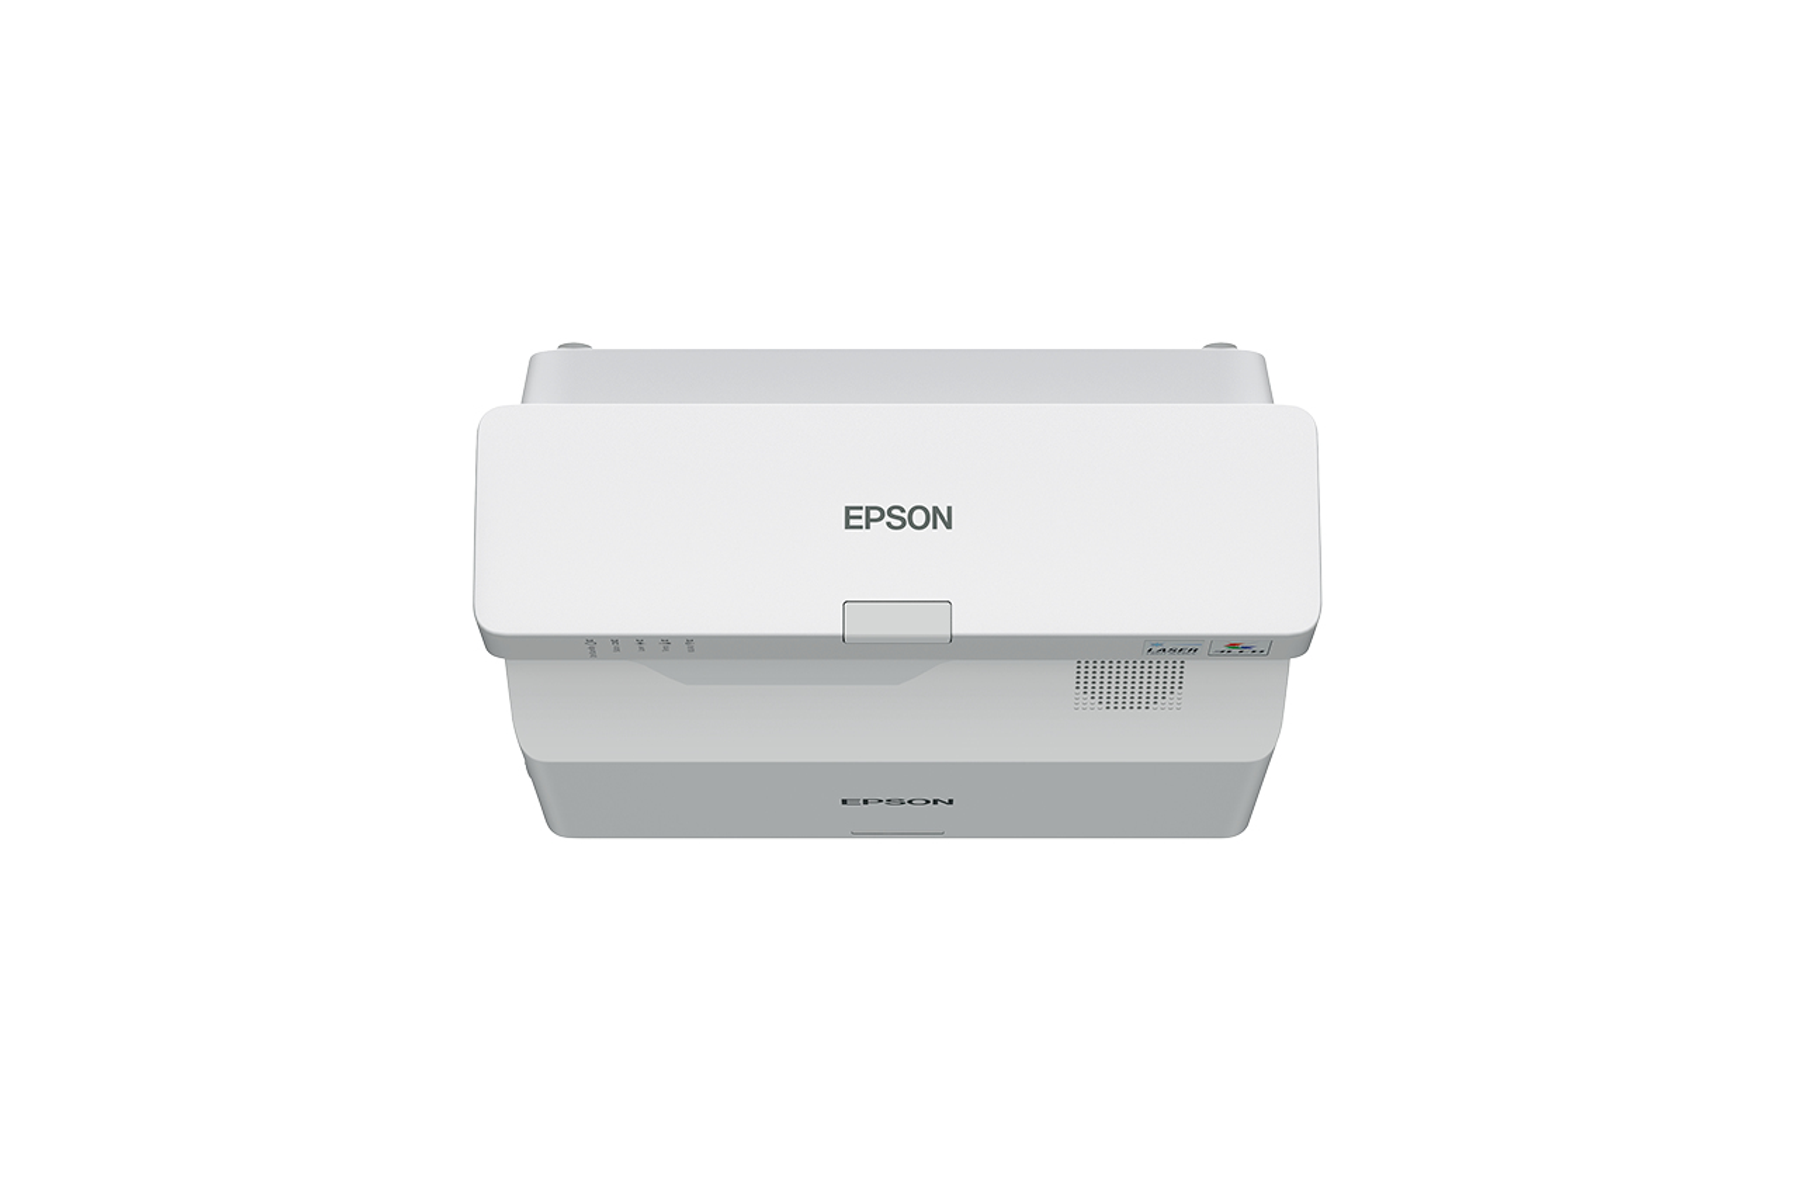 Beamer(Full-HD, Lumen) EB-770Fi 4100 EPSON